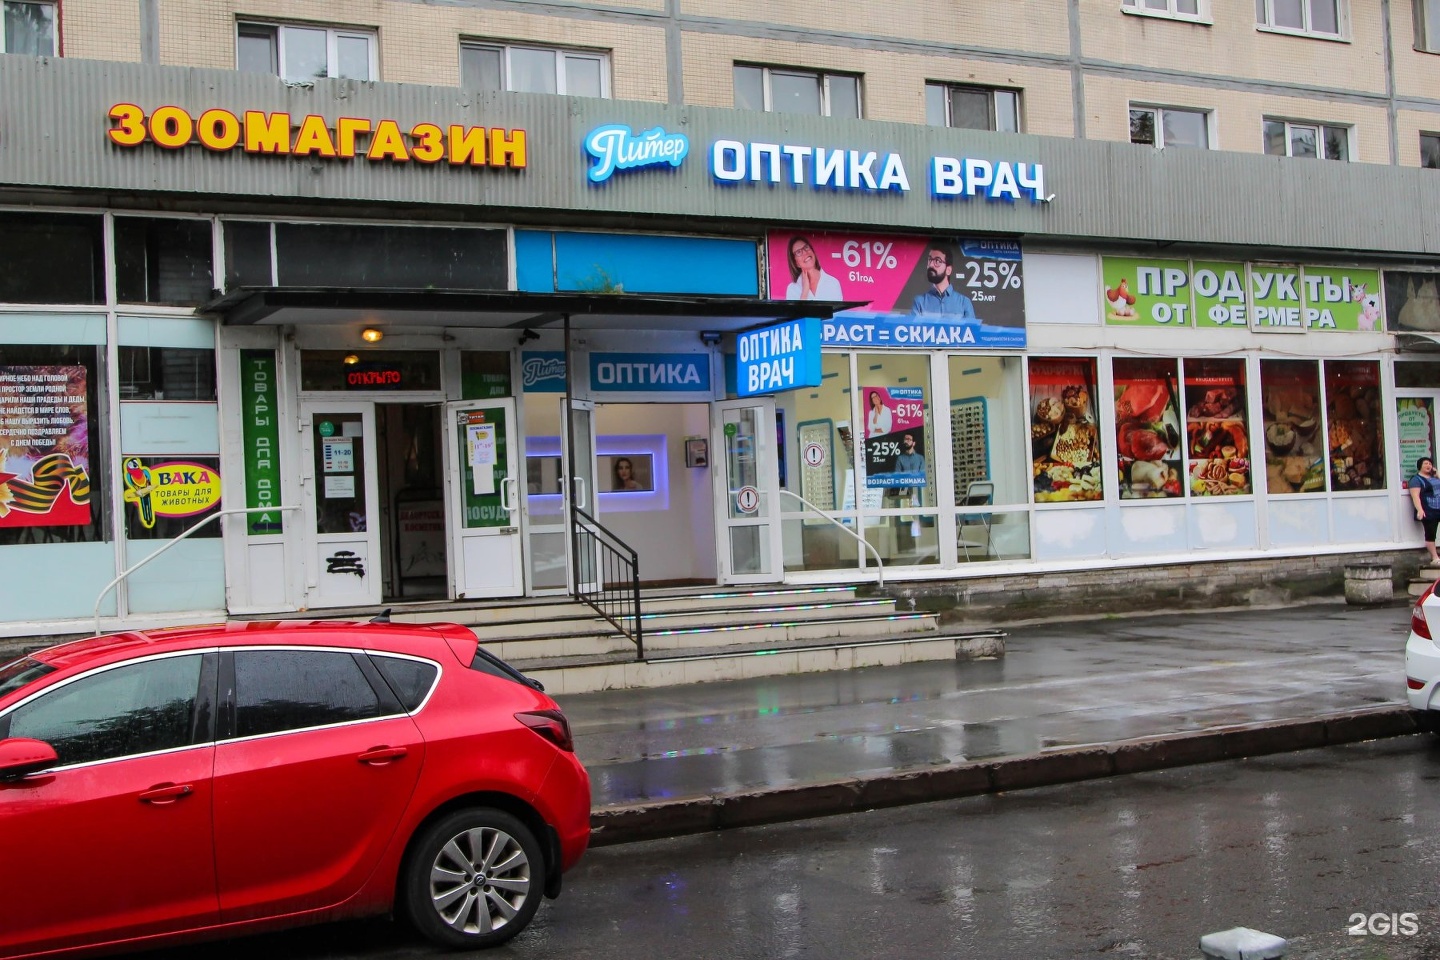 Магазин Оптики Петербург